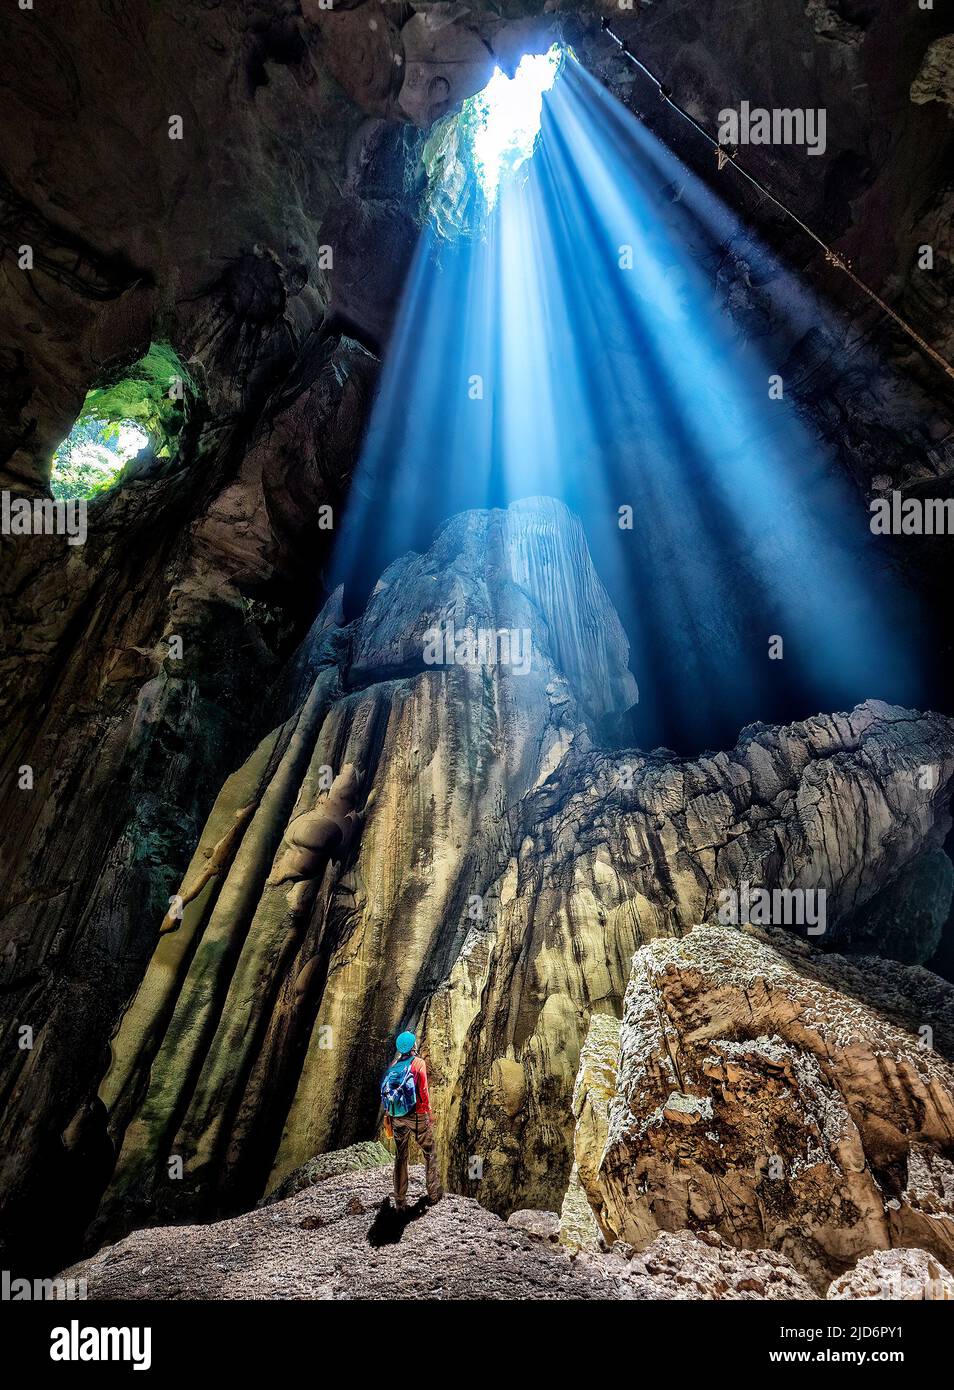 Claraboya en Niah Great Cave, Sarawak, Malasia Foto de stock